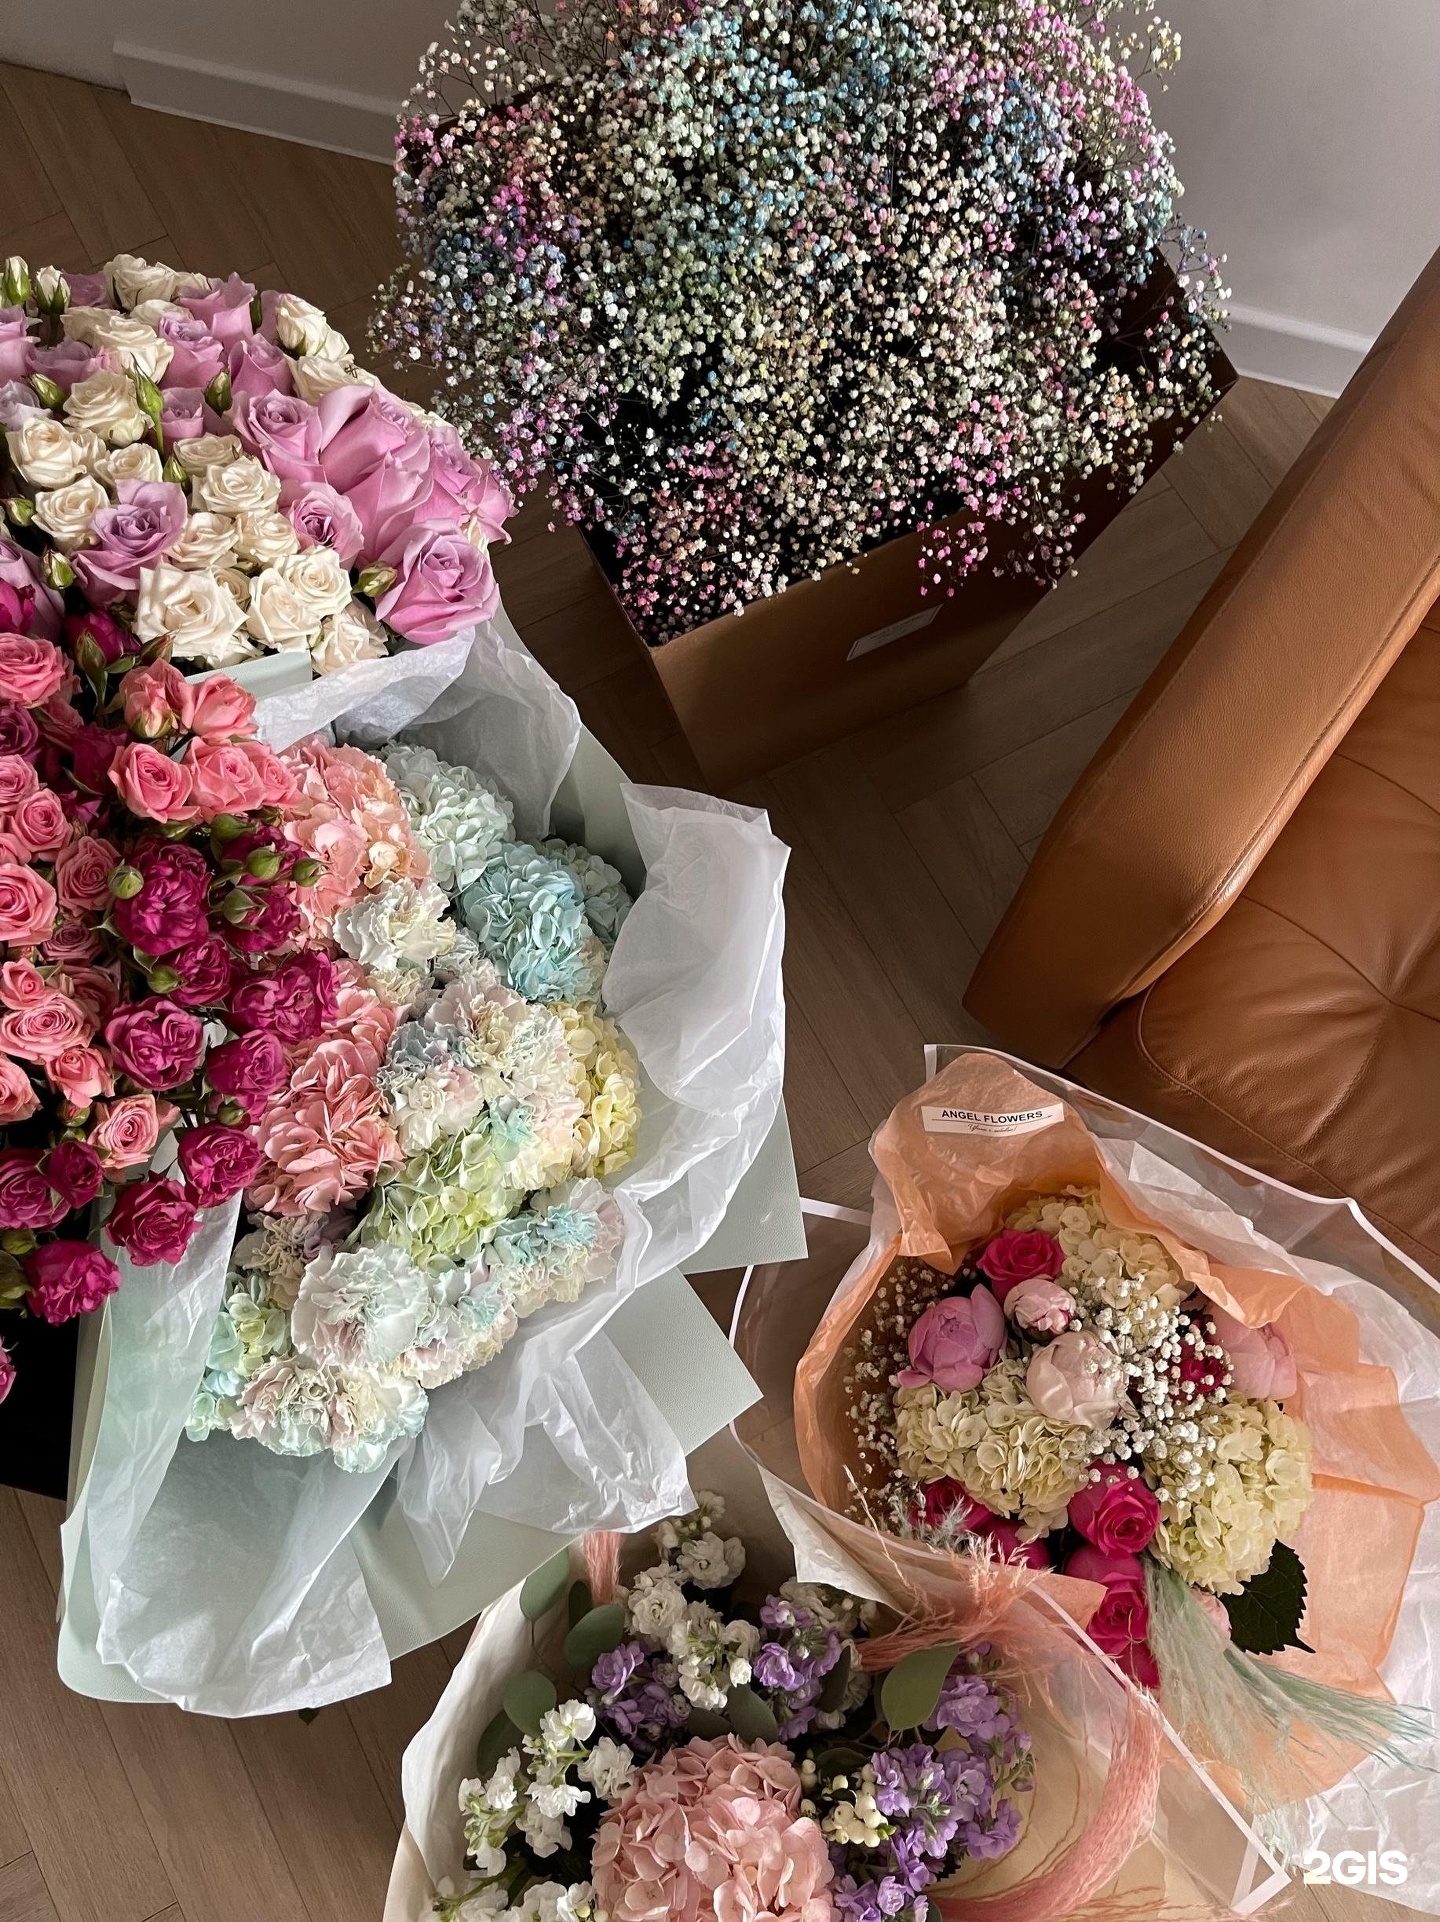 Angeline flowers. Цветы салон Нефтекамск. Цветок САЛОНУМА. Цветы в салоне Uni v фото.